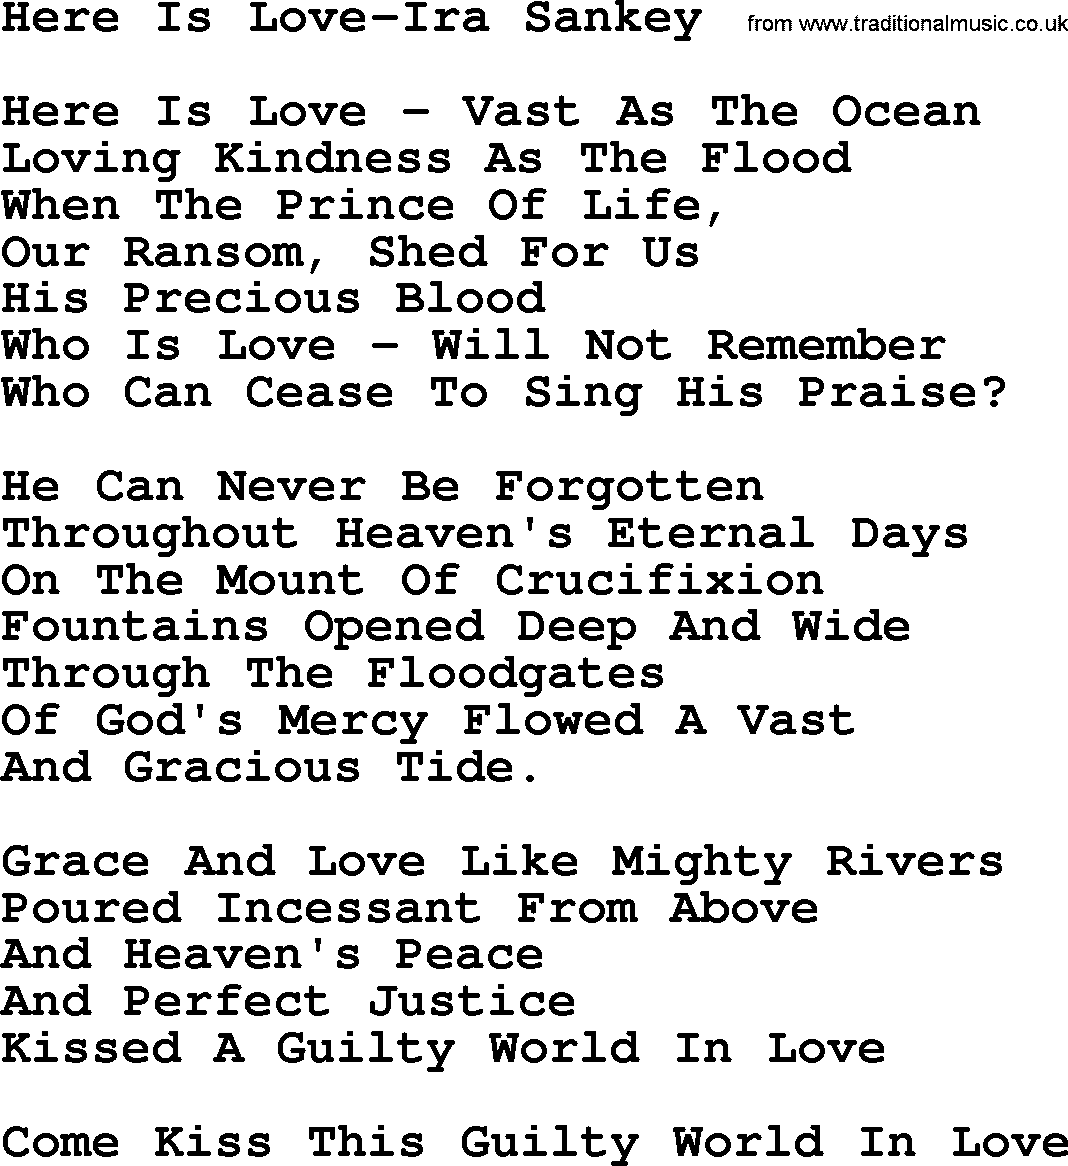 Ira Sankey hymn: Here Is Love-Ira Sankey, lyrics